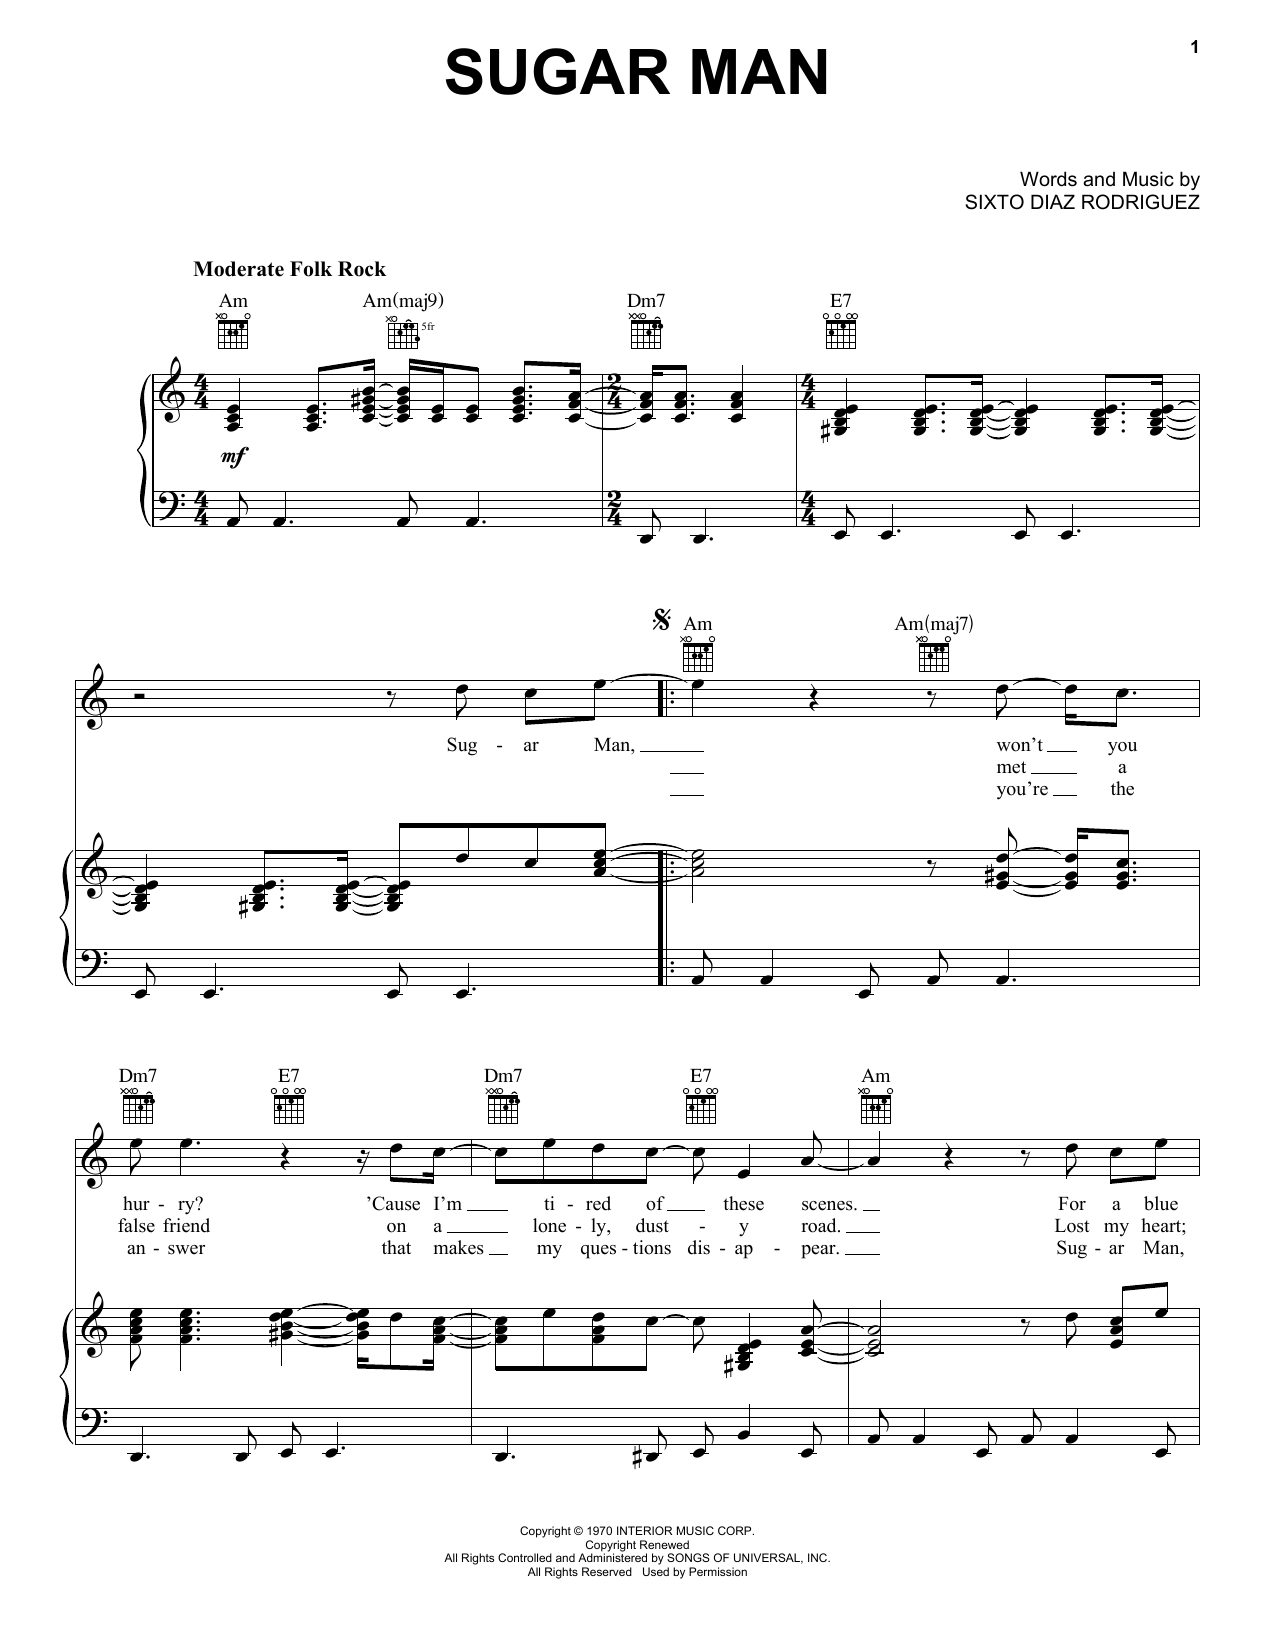 Rodriguez Sugar Man Sheet Music Notes & Chords for Lyrics & Chords - Download or Print PDF